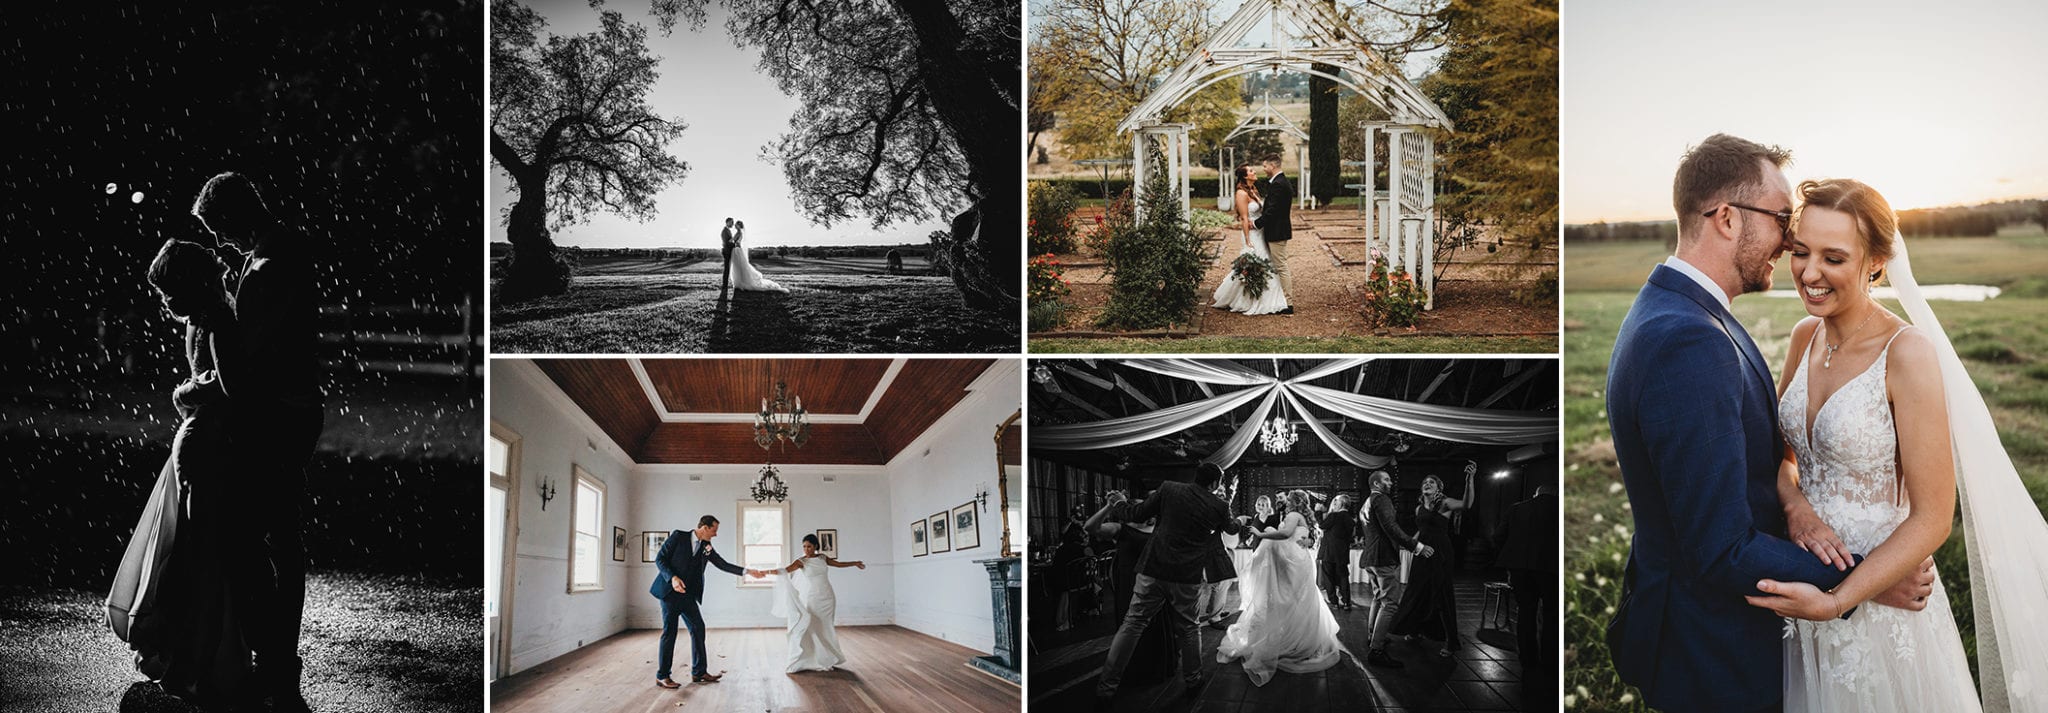 Wedding photography at various Macarthur venues